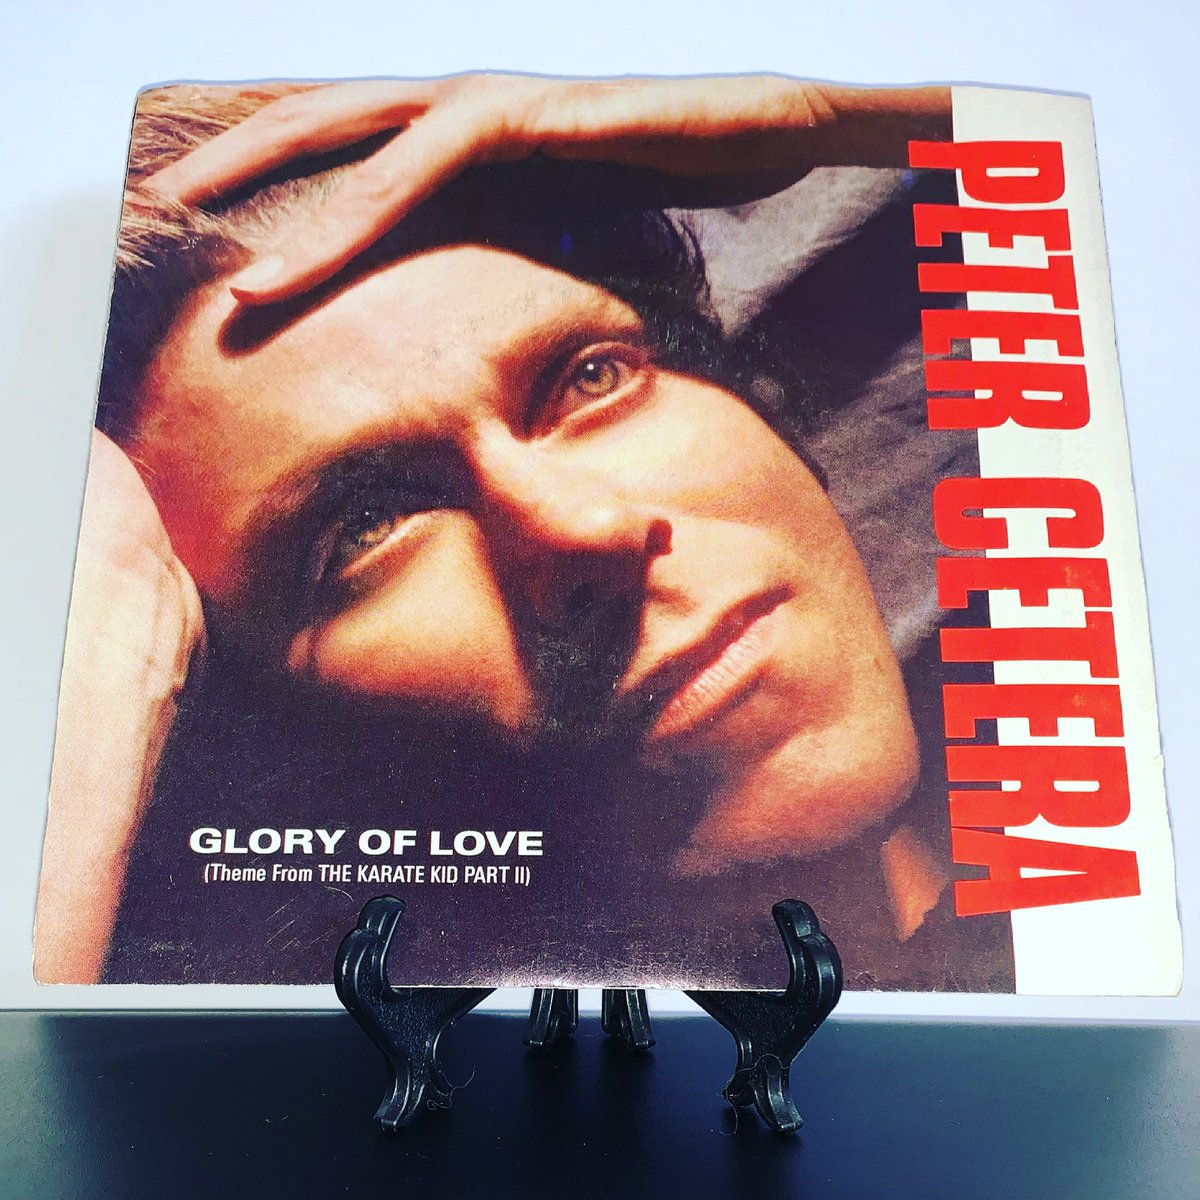 New Vinyl 45, Peter Cetera “Glory Of Love” (1986) #records #45s #vinylcollection #vinylcollector #pop #80s #music #petercetera #gloryoflove #karatekid2 #soundtrack #vinyl45